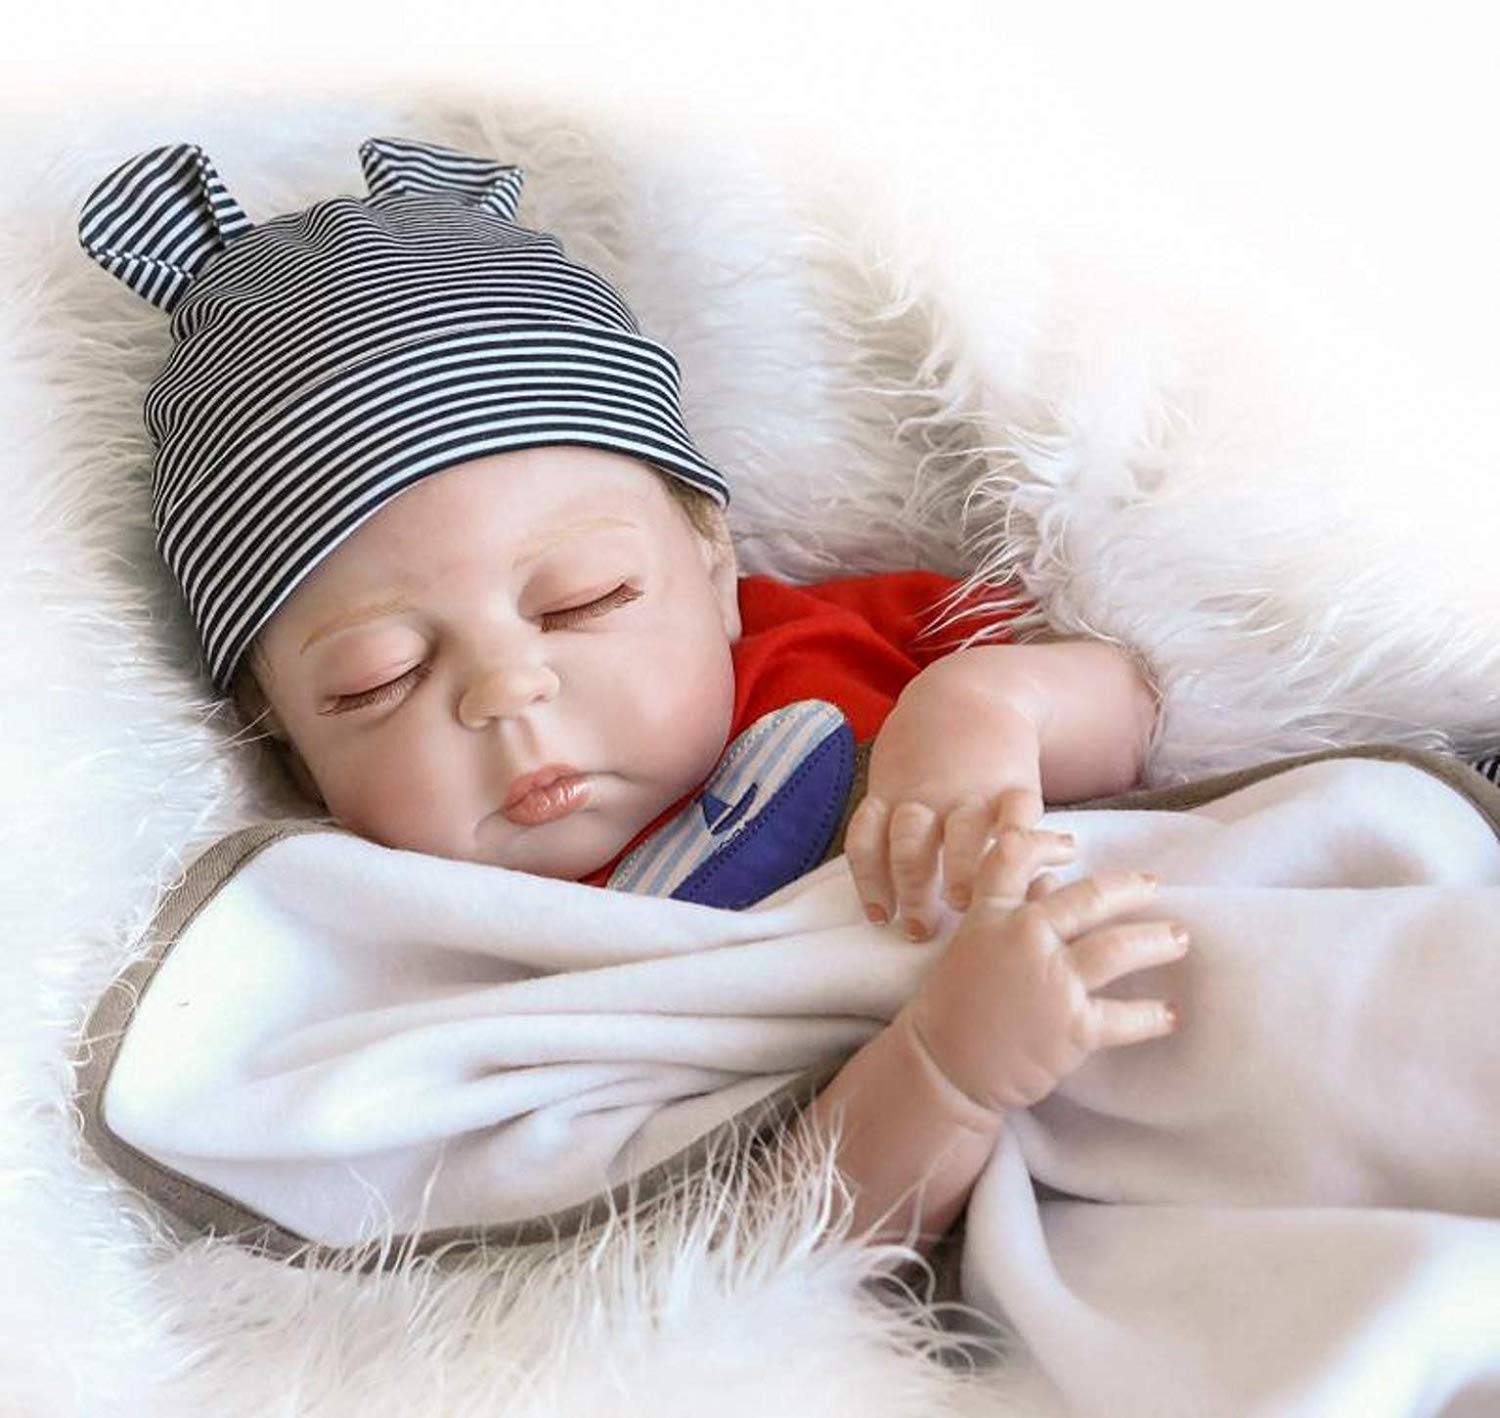 ZIYIUI Real Looking 18 inch Reborn Baby Dolls Full Body Silicone vinyl Realistic Reborn Baby Boy Real Newborn